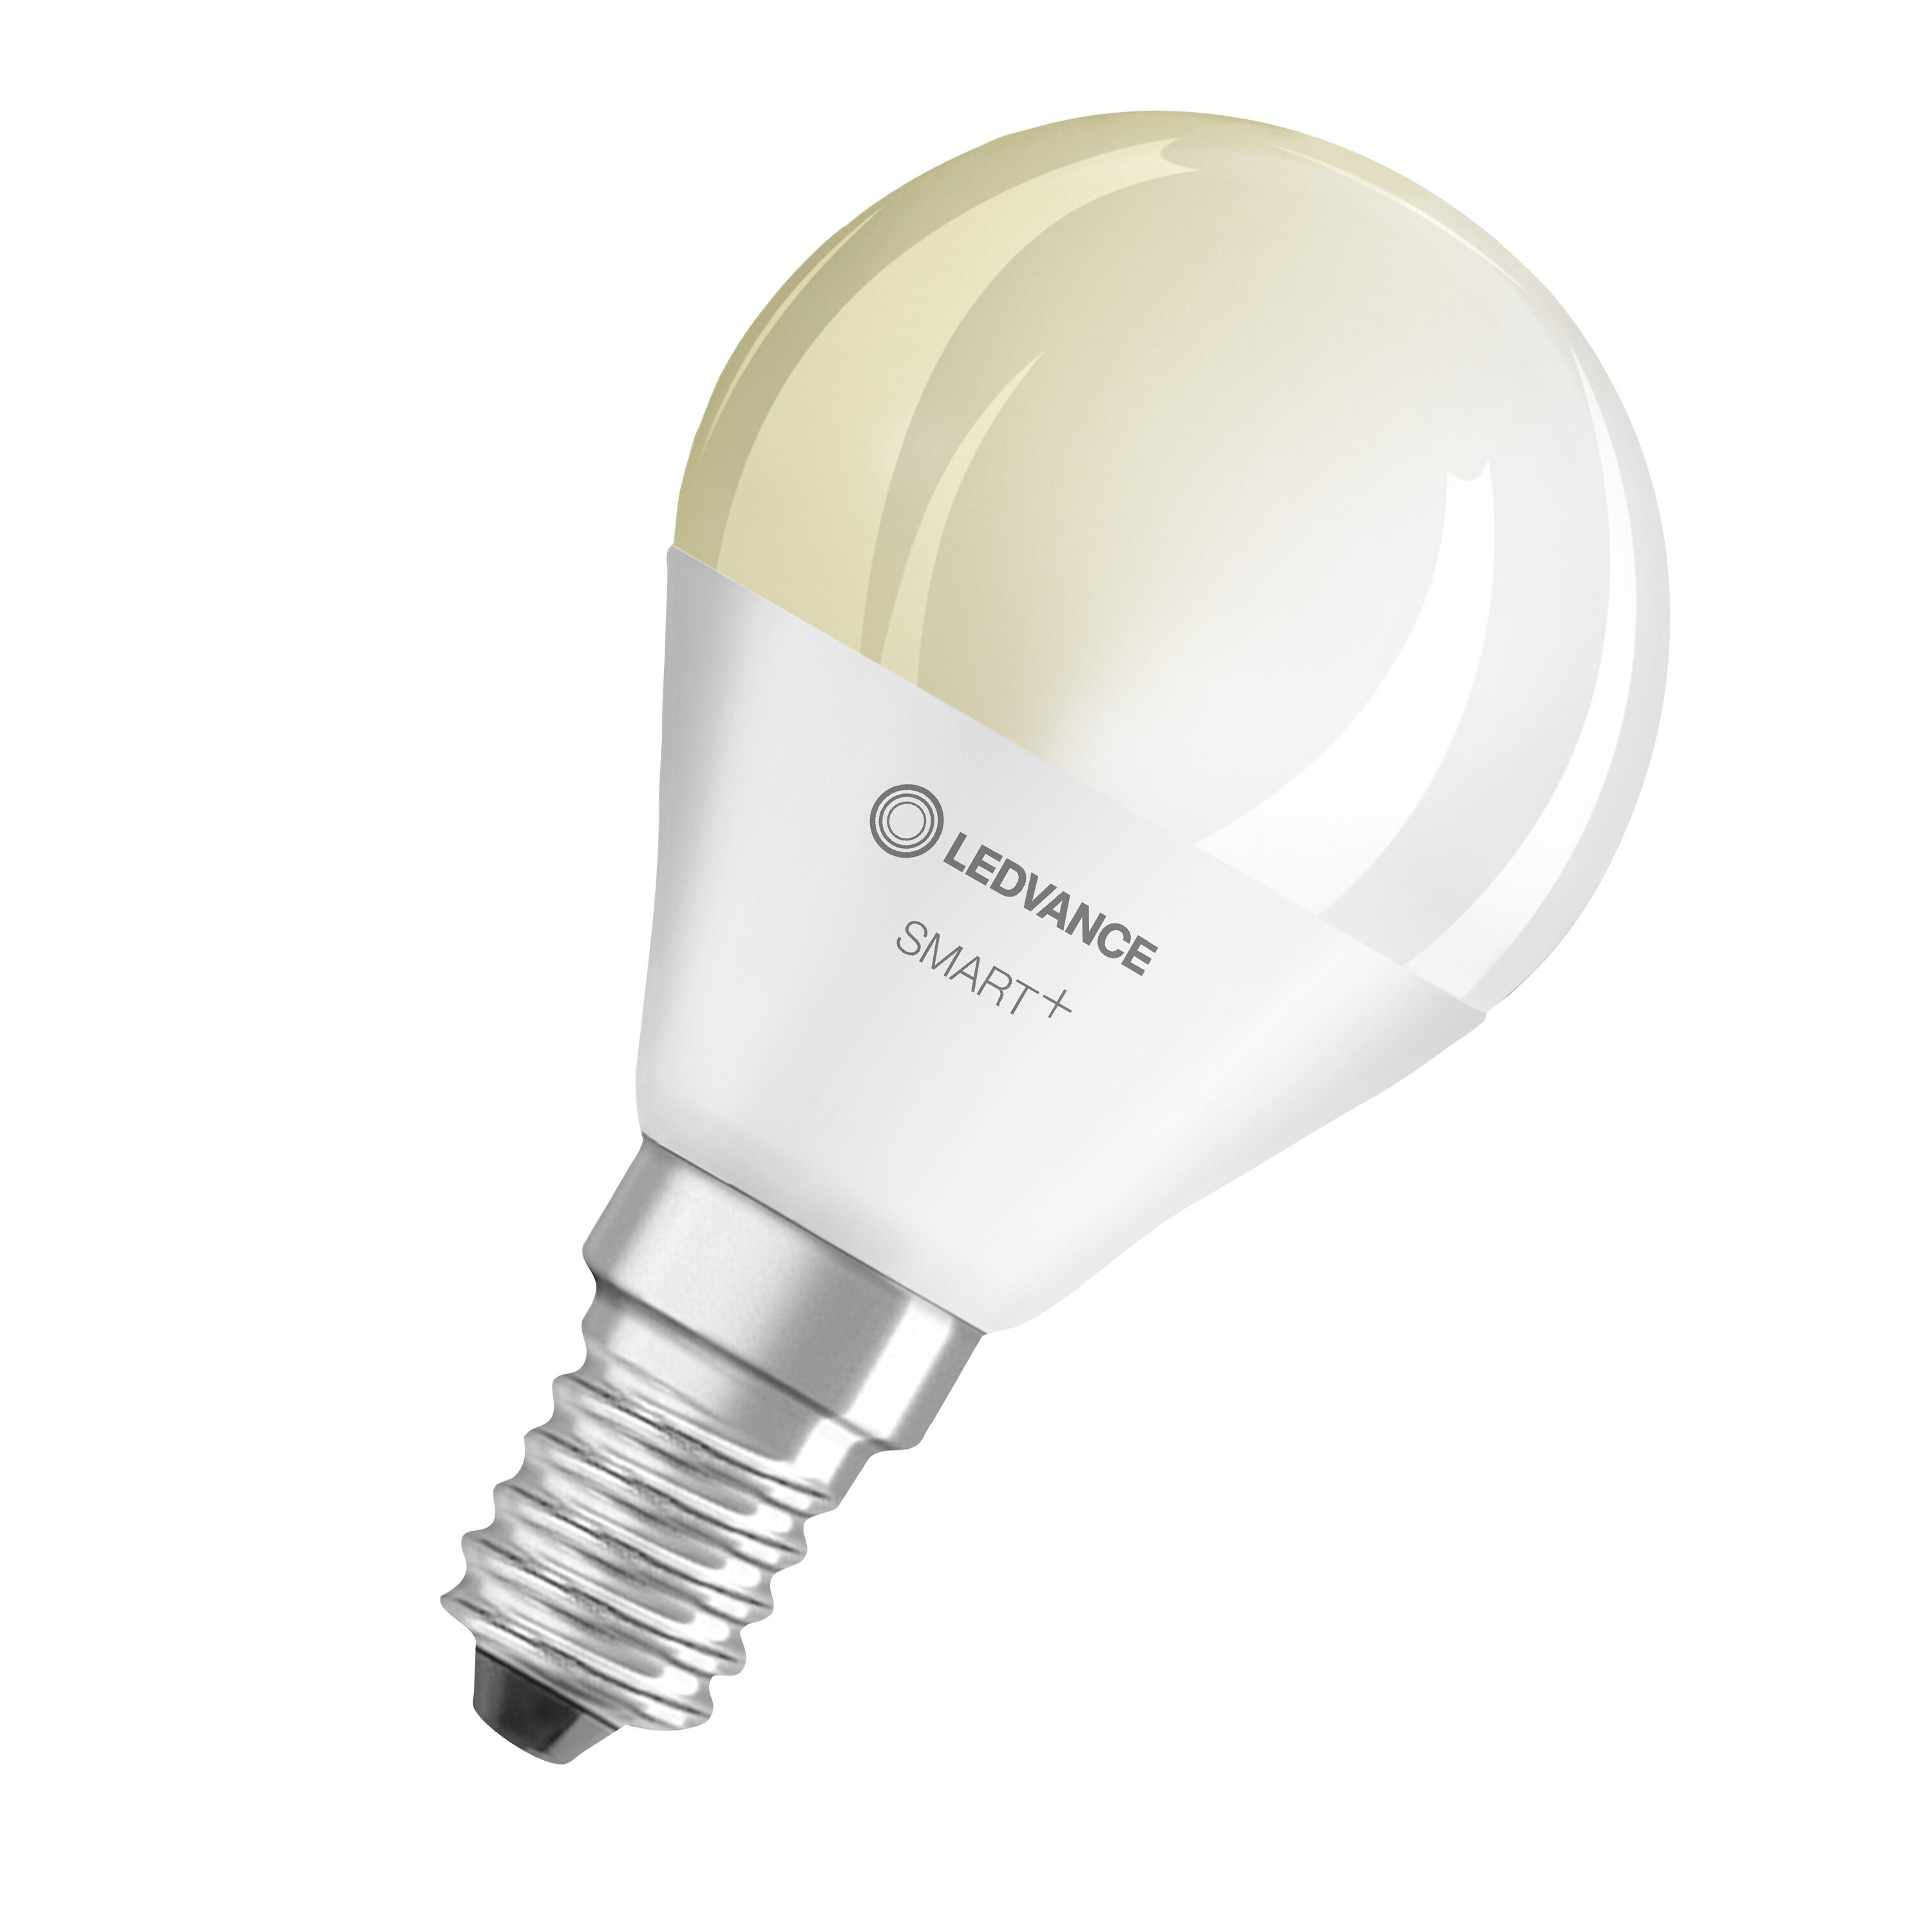 LEDVANCE SMART+ WiFi Mini Bulb Lampe Smarte LED Warmweiß Dimmable